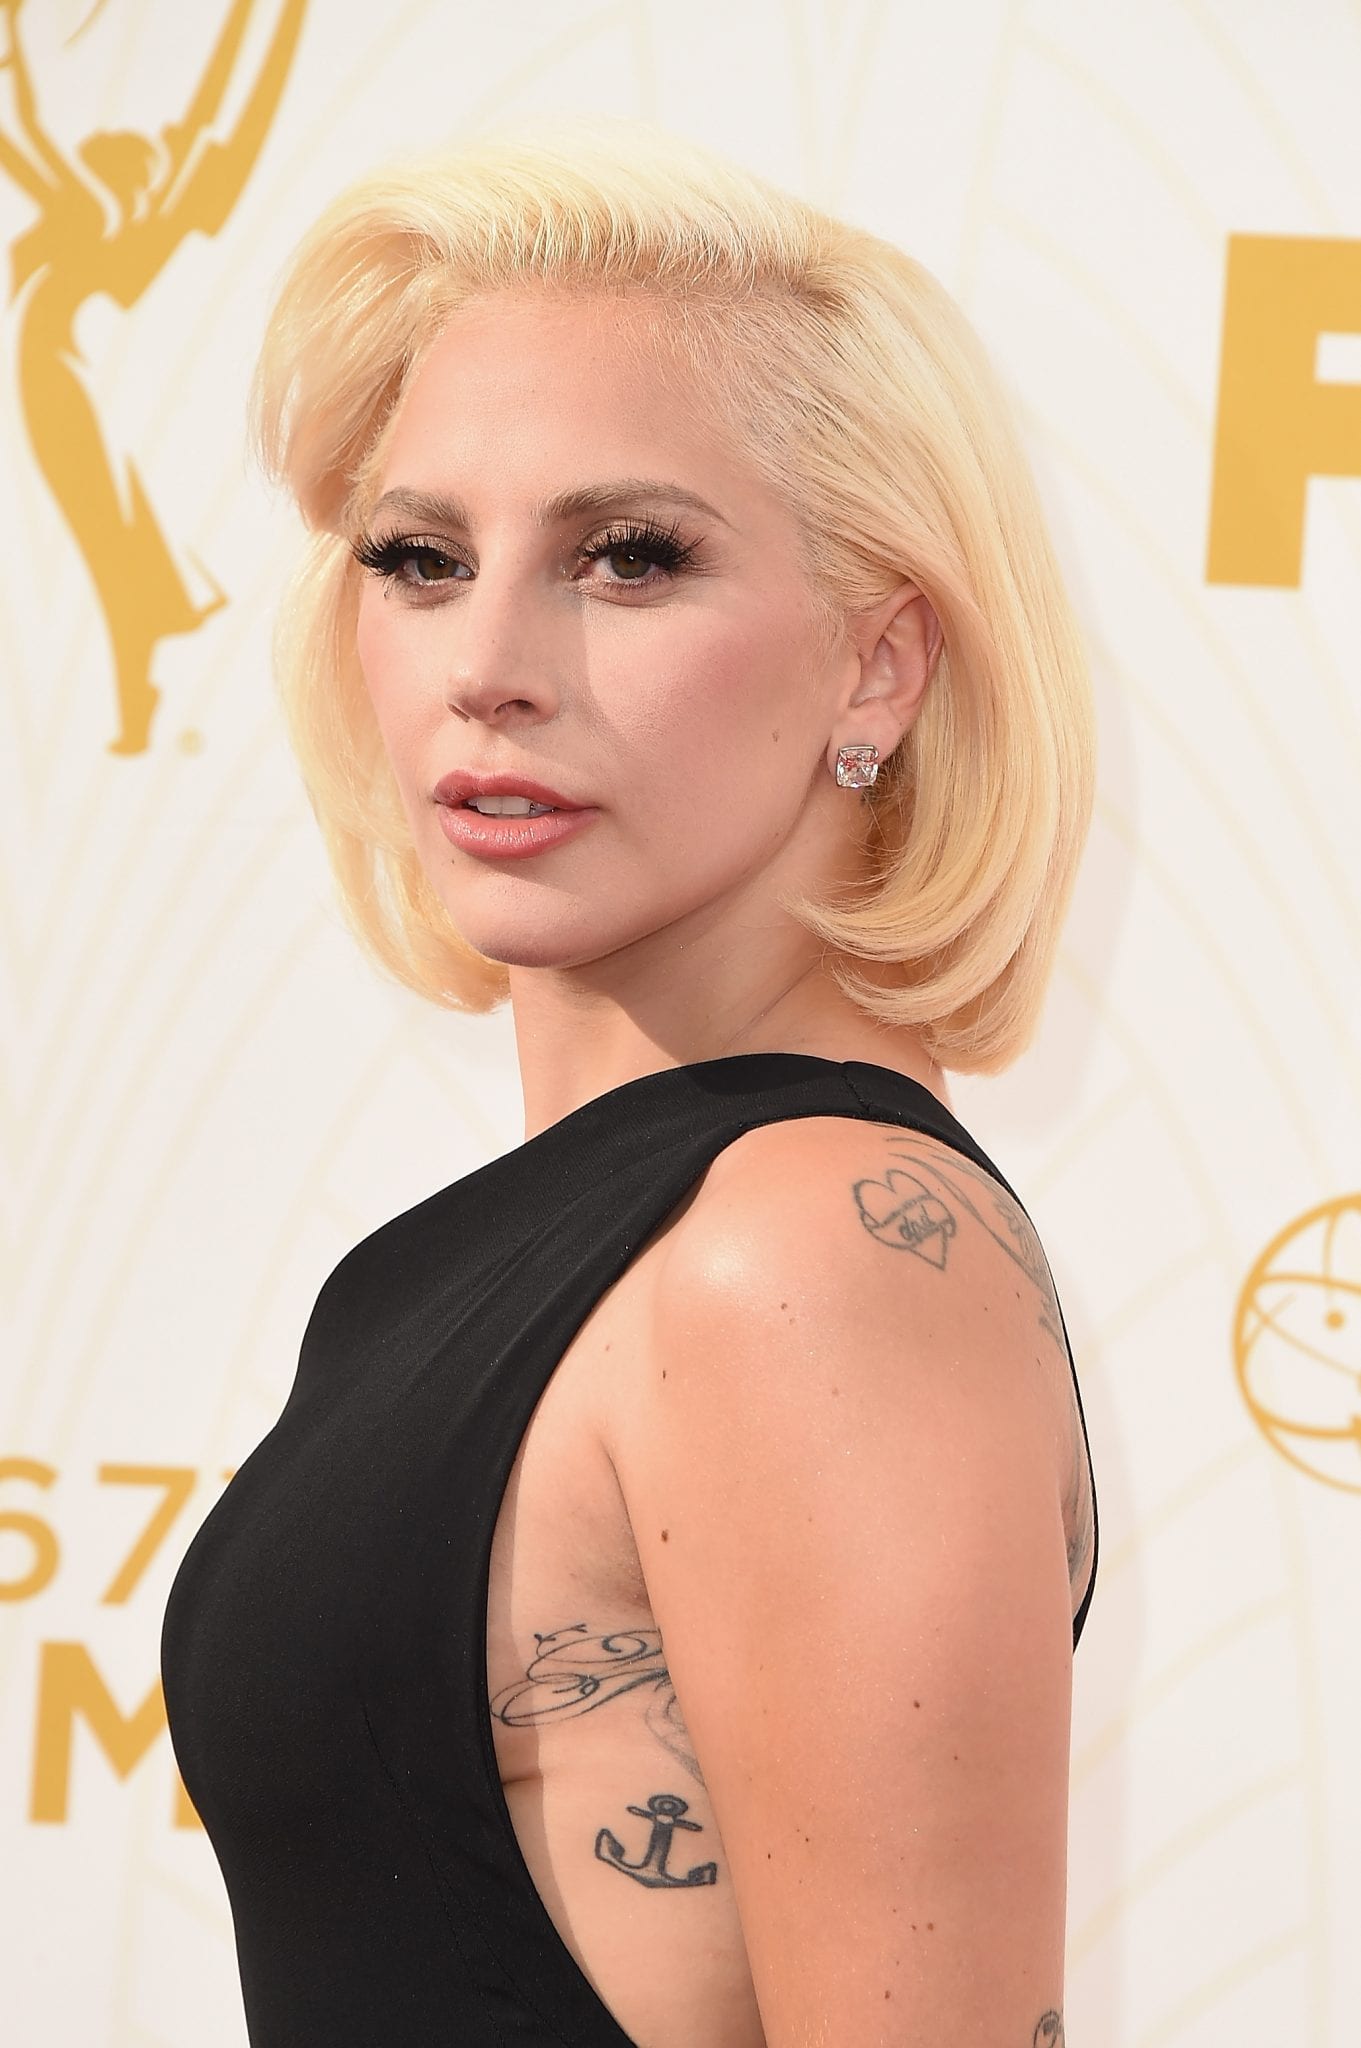 Lady Gaga hair-do styled using Matrix StyleLink products